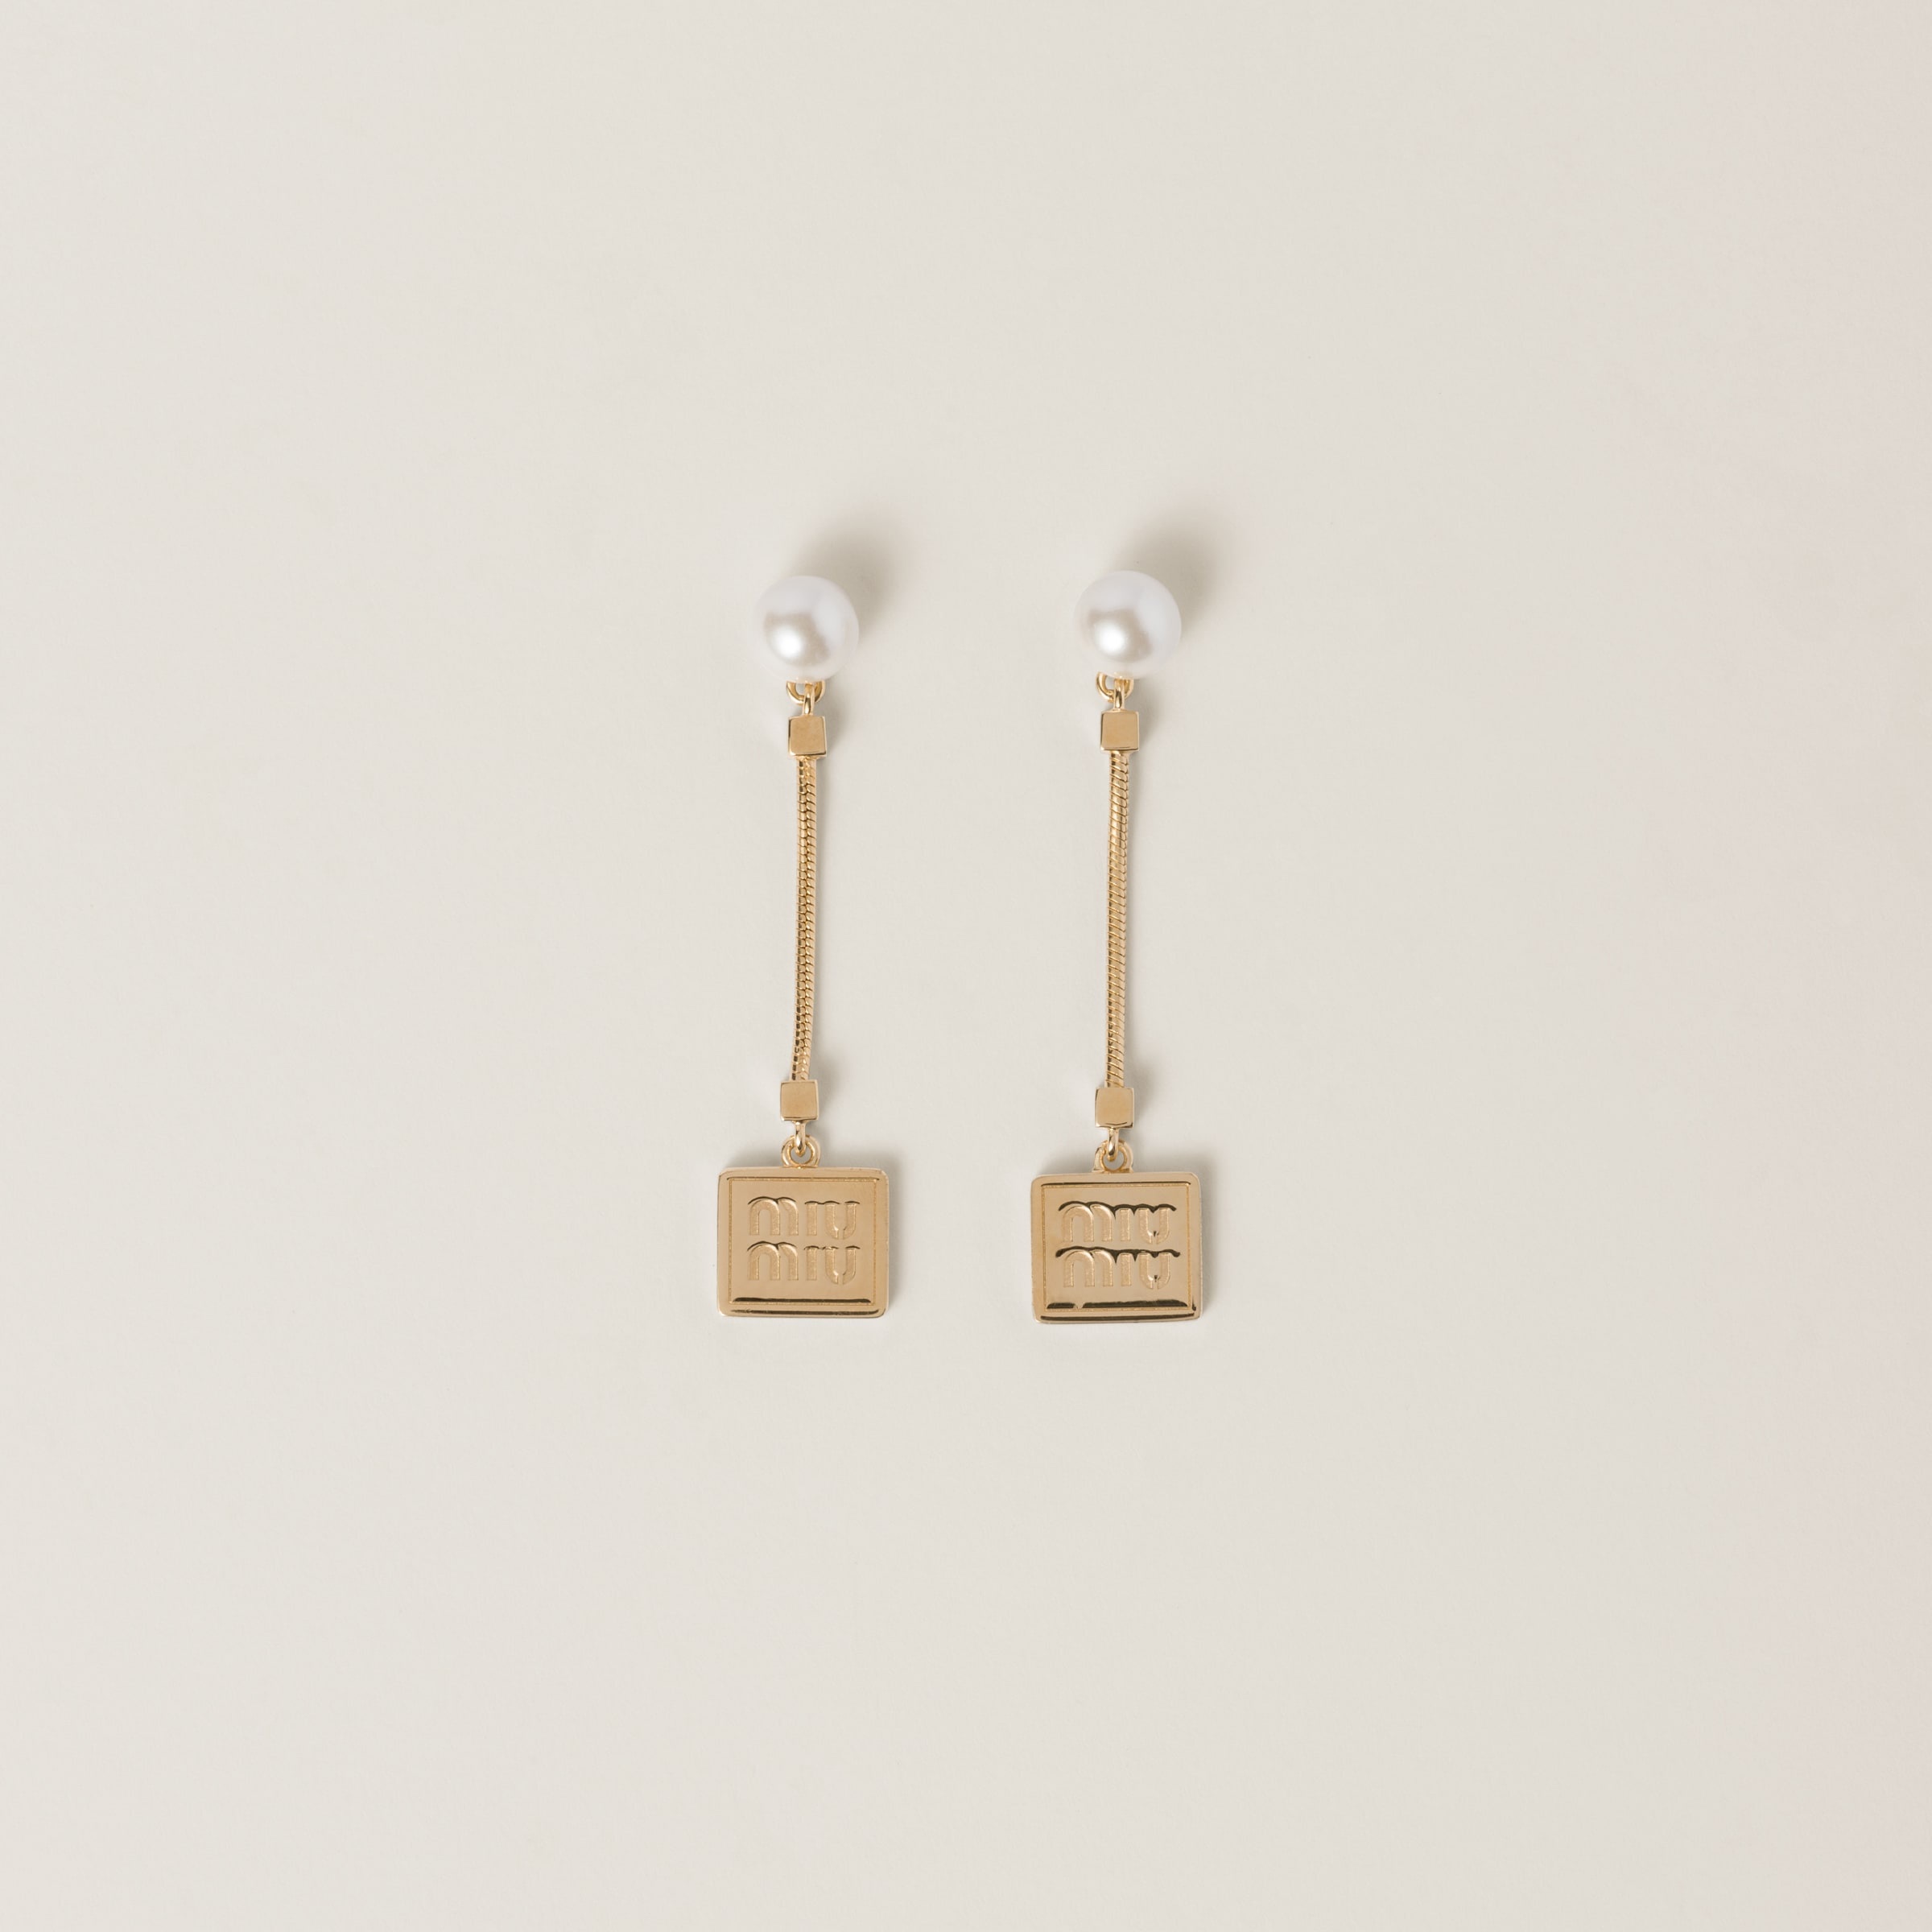 Metal earrings with artificial pearls - 1